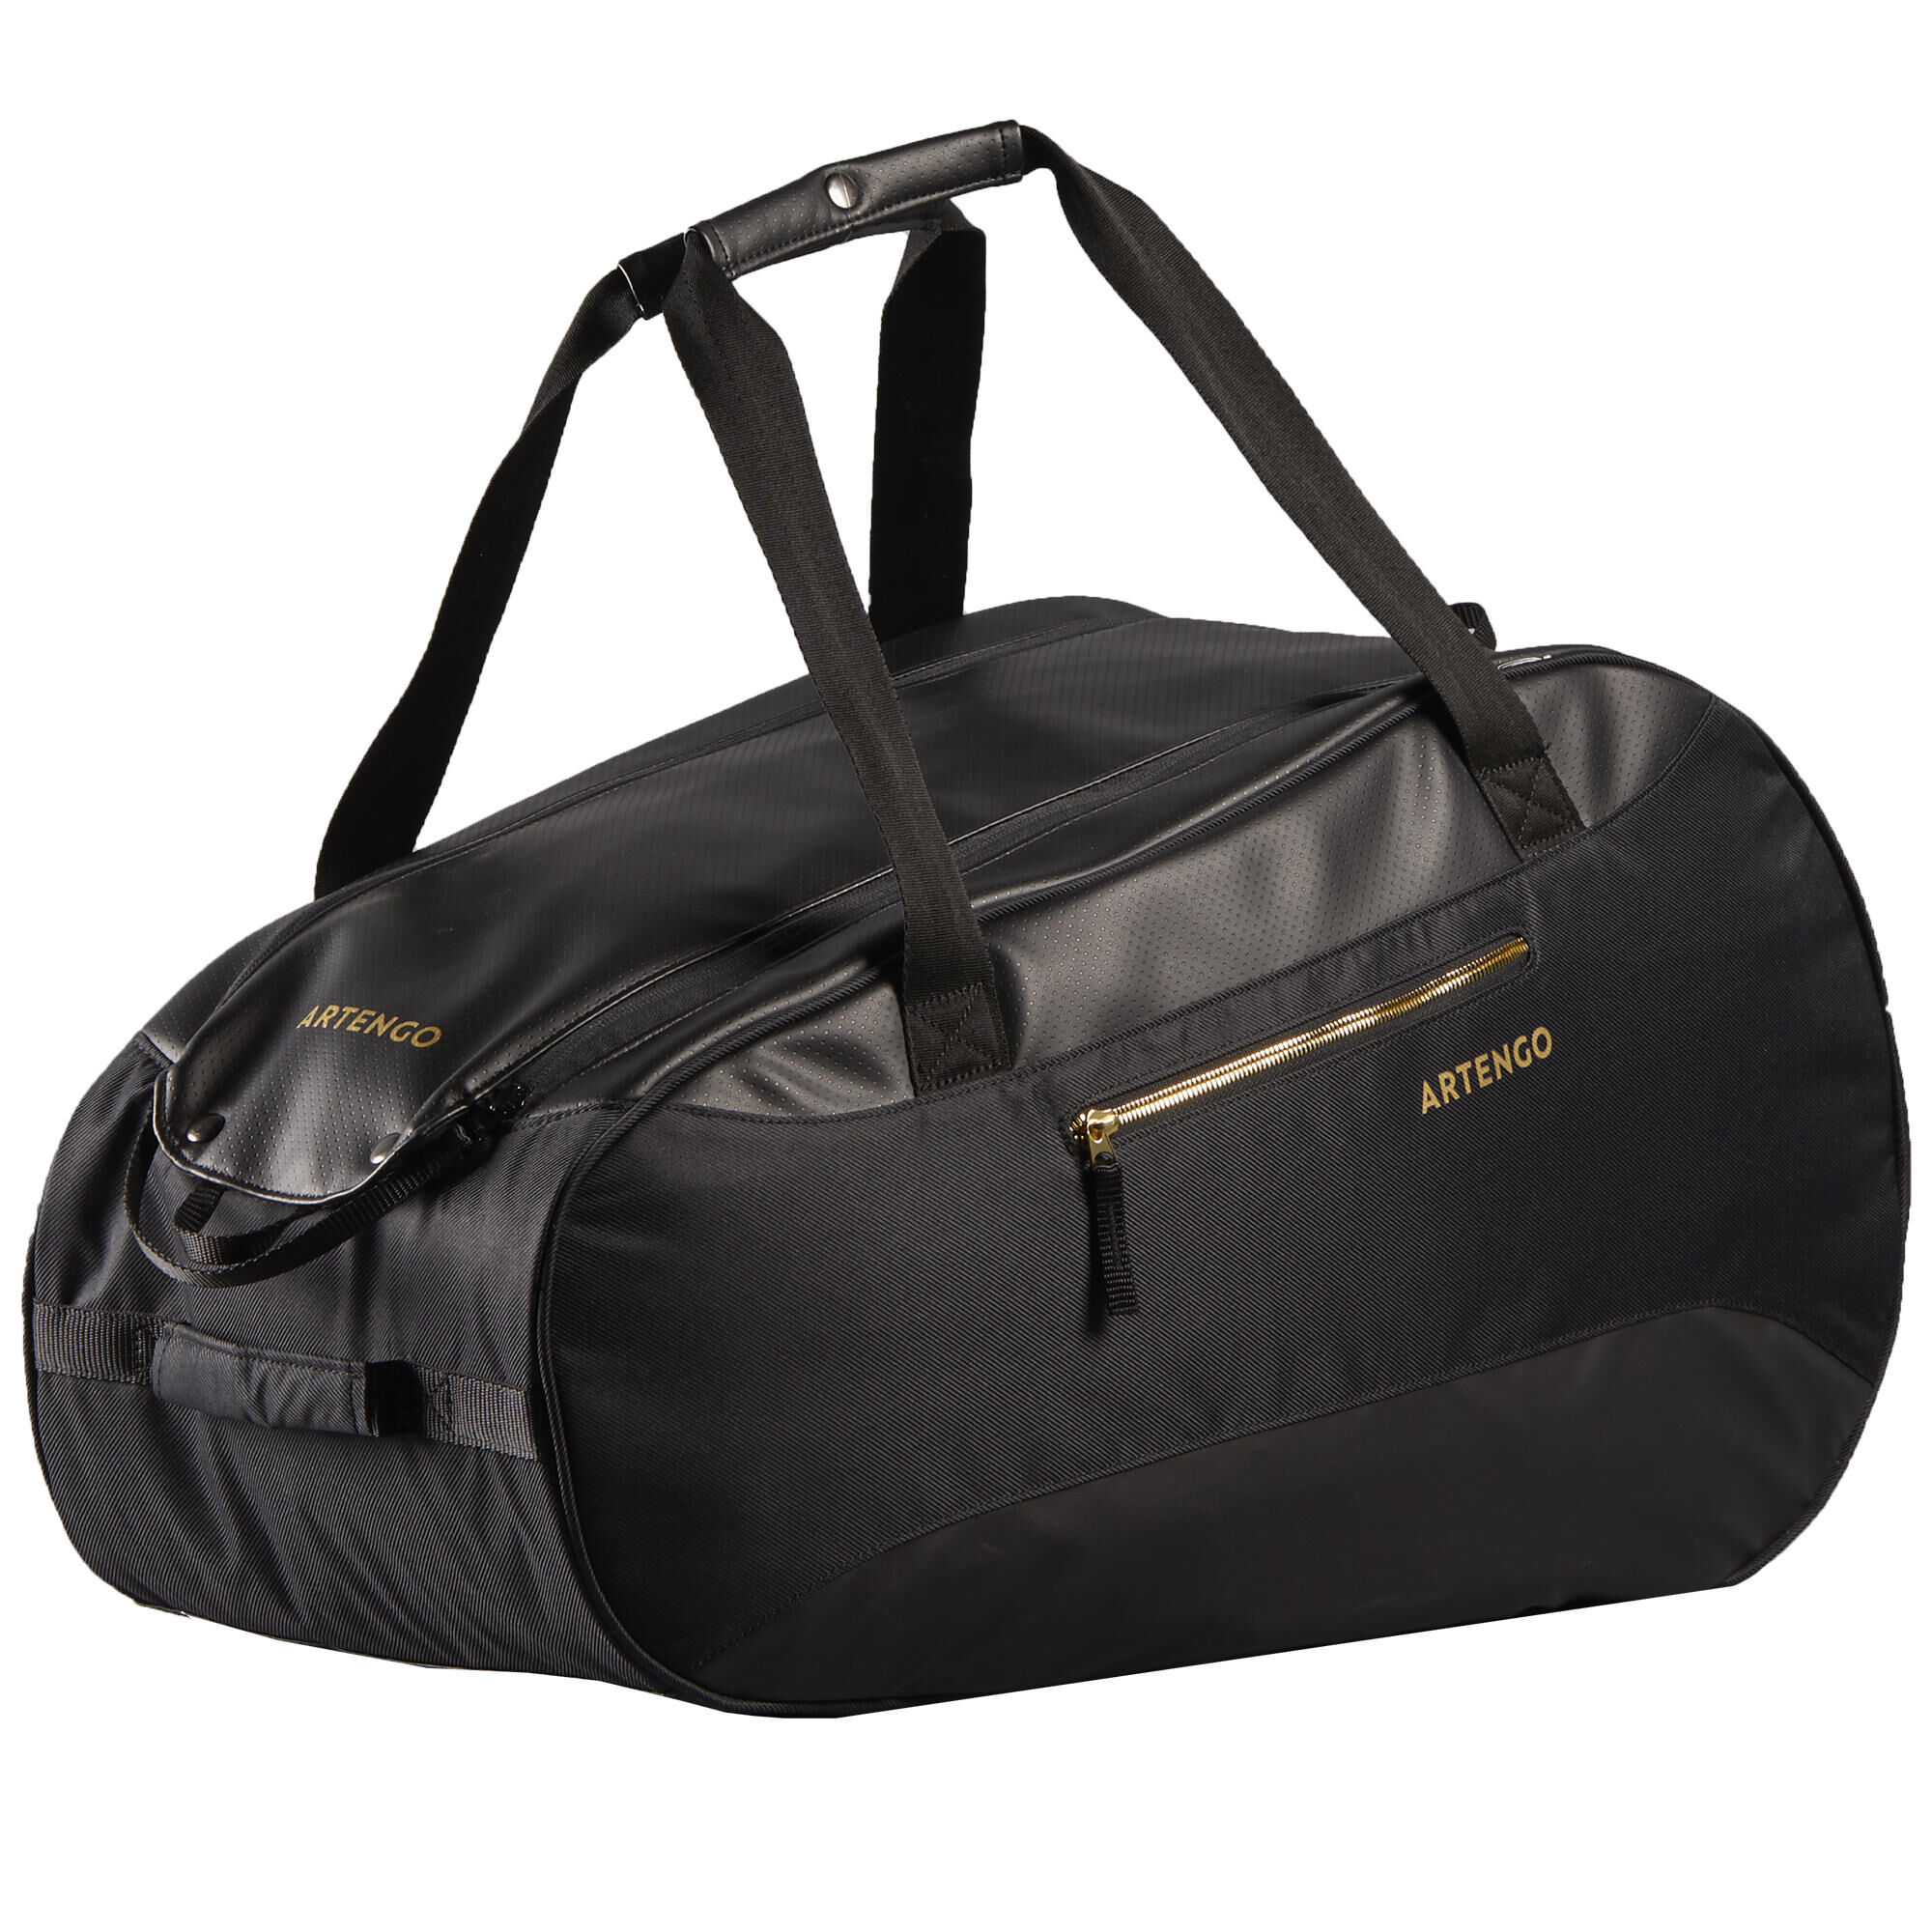 ARTENGO Sports Bag 500 S - Black